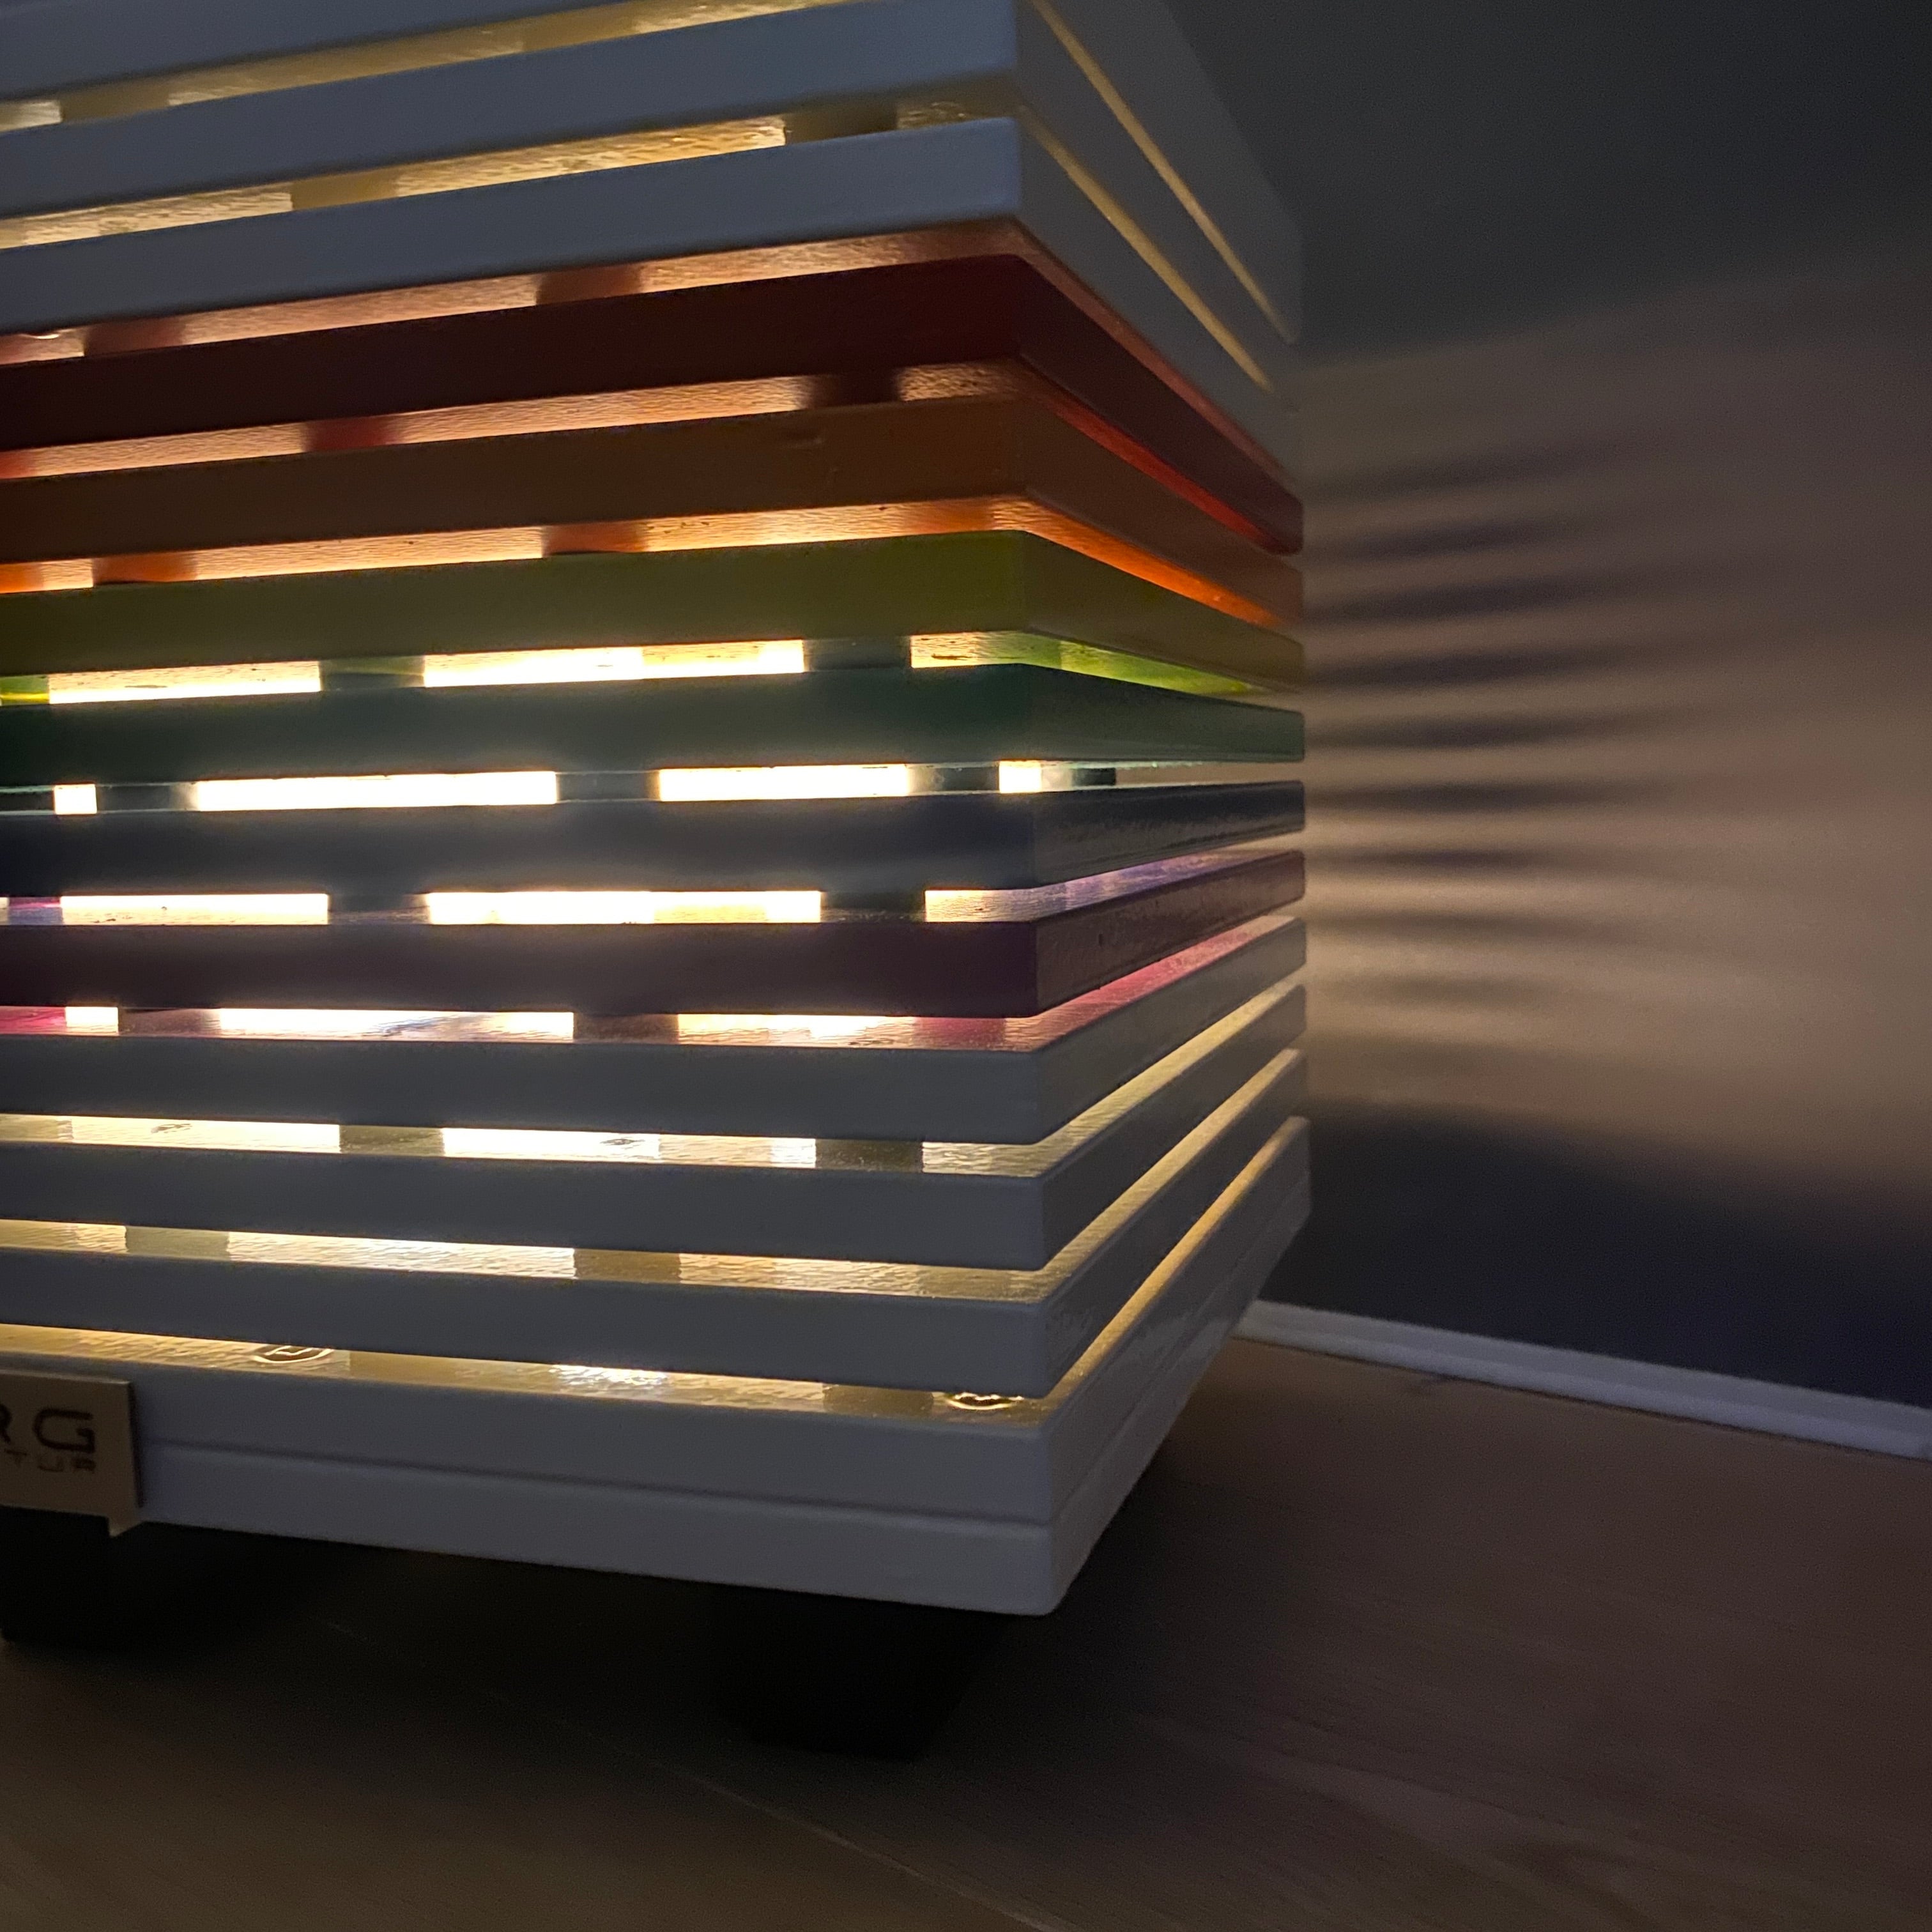 Design smartQUBE RGBT Rainbow WHITE Limited Edition 